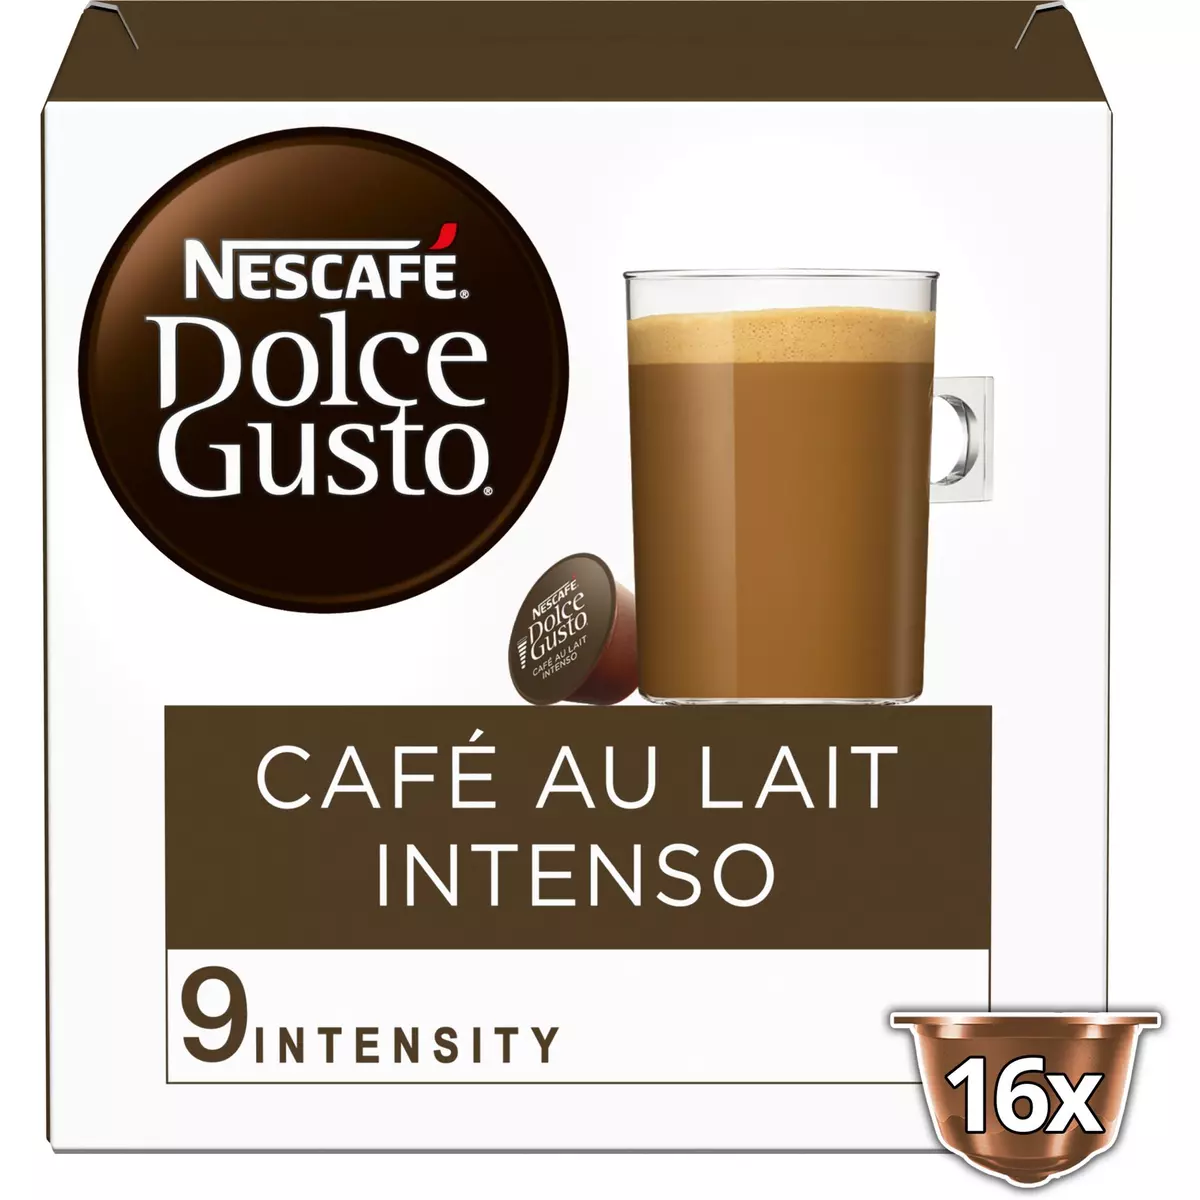 STARBUCKS Capsules de café cappuccino compatibles Dolce Gusto 2X6 capsules  120g pas cher 